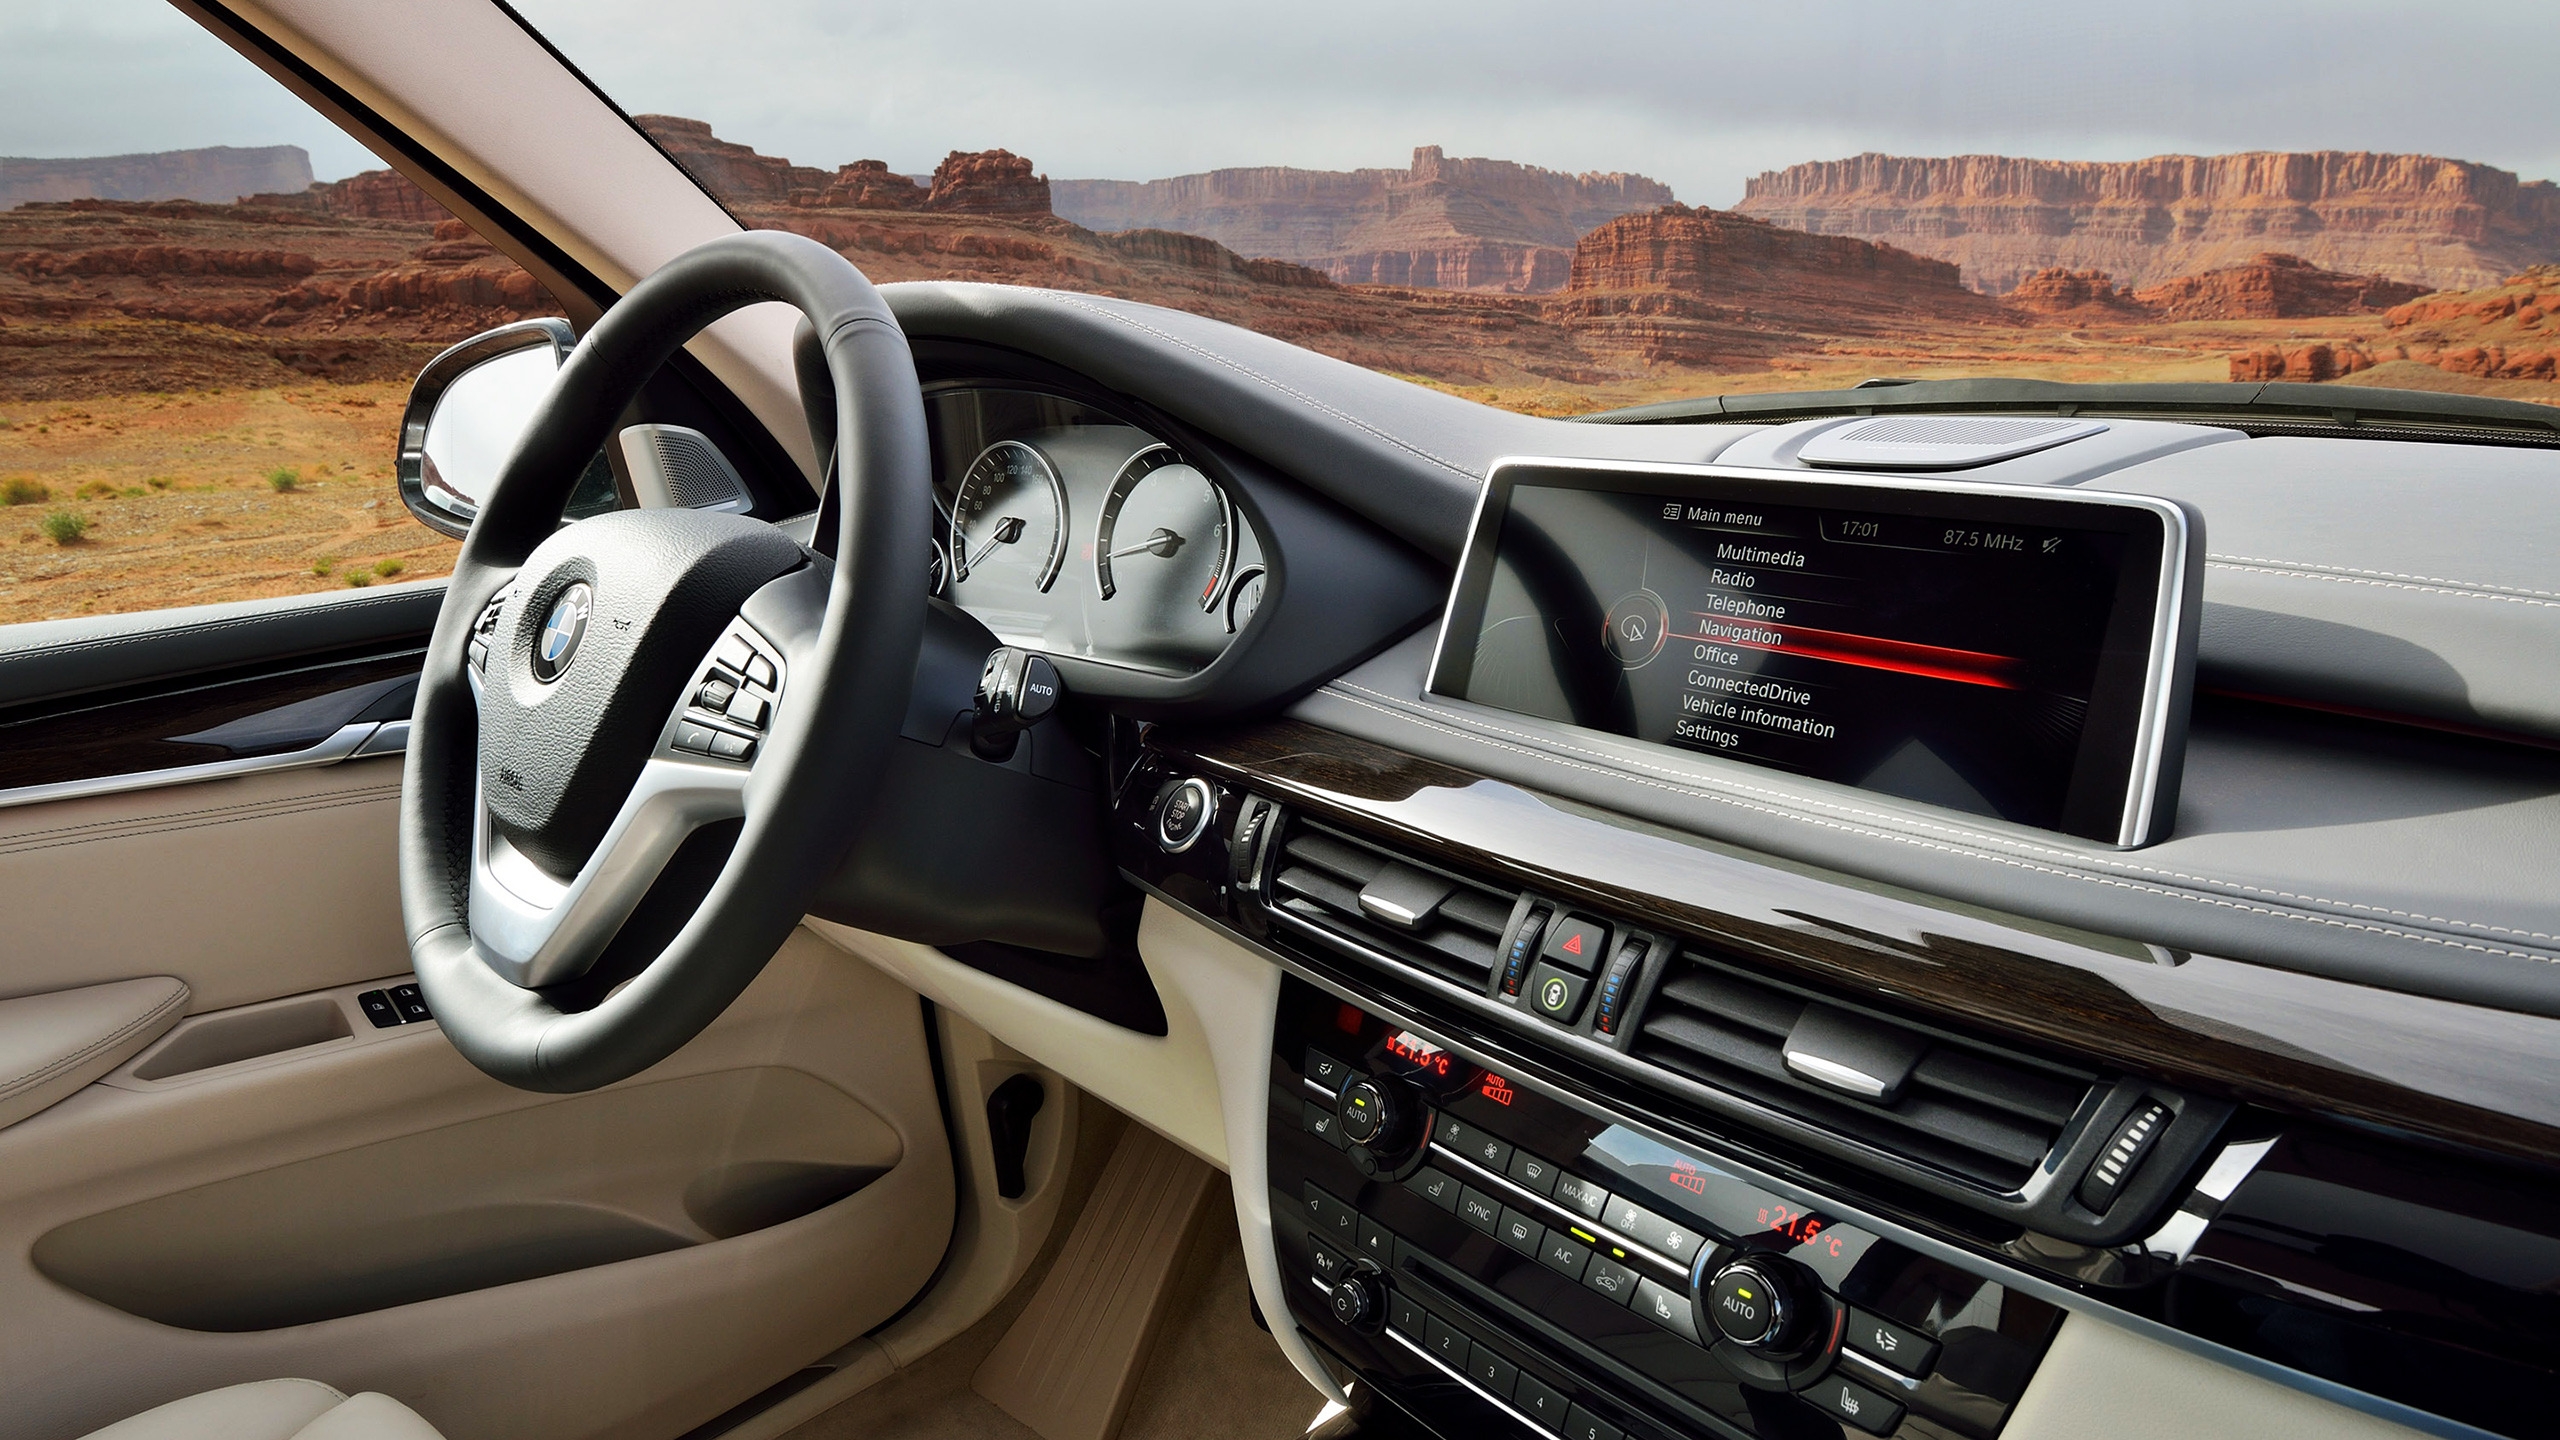 BMW X5 2014 Dashboard for 2560x1440 HDTV resolution